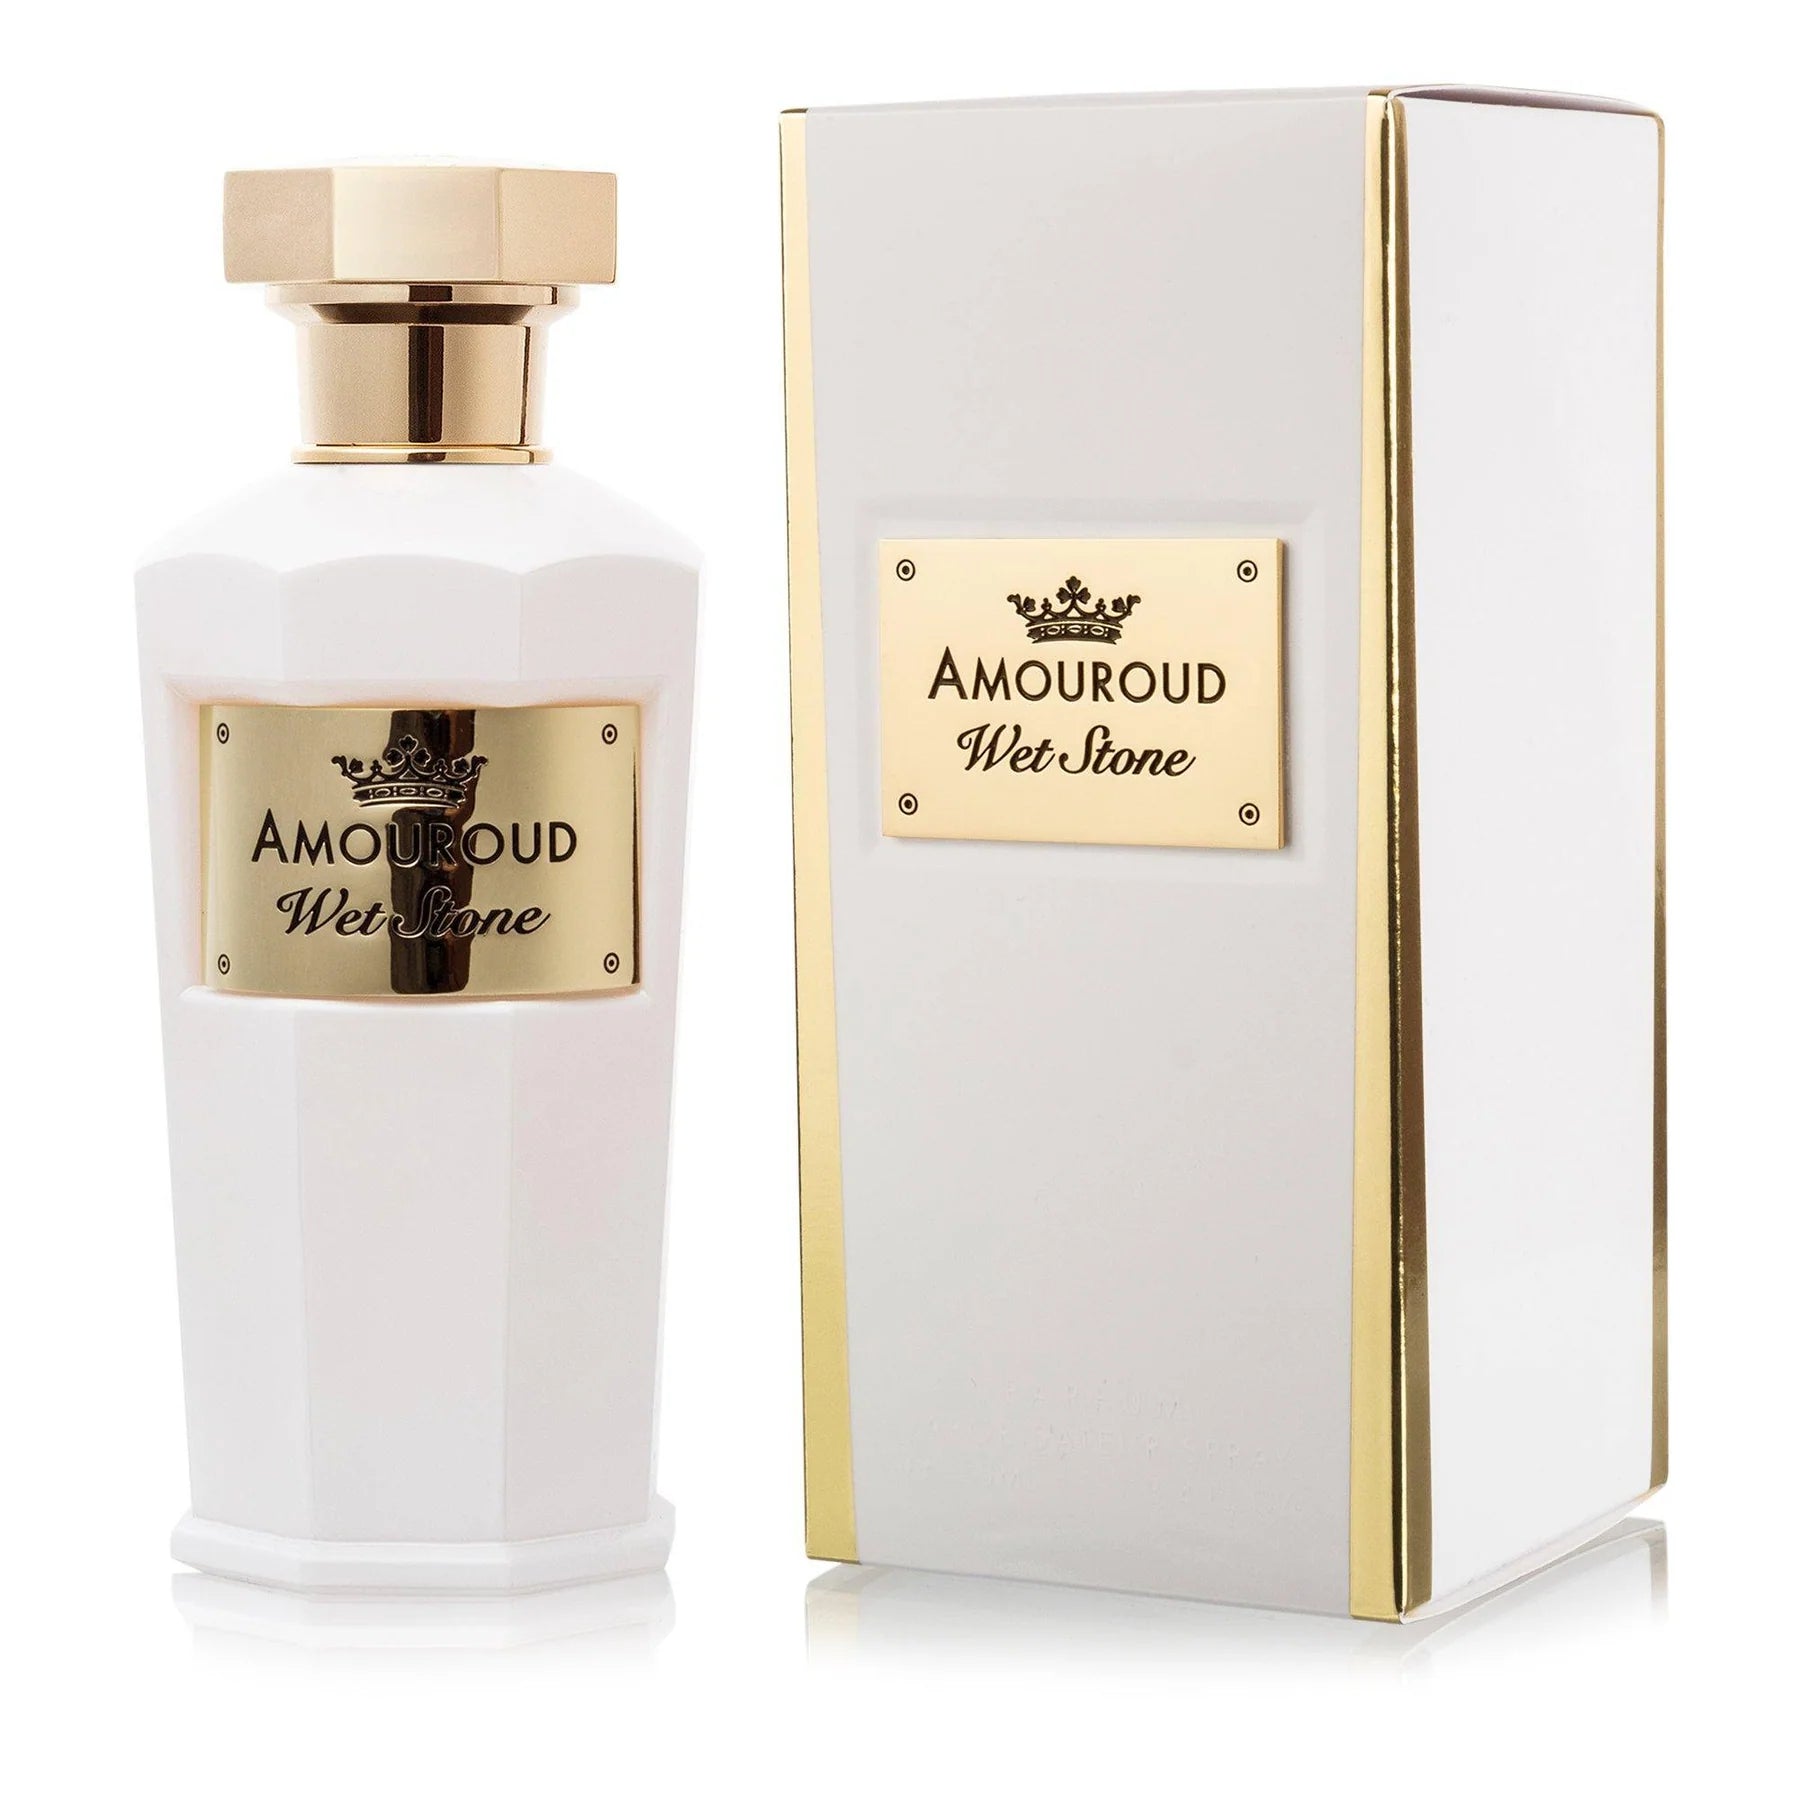 Amouroud Wet Stone EDP 100ml Perfume